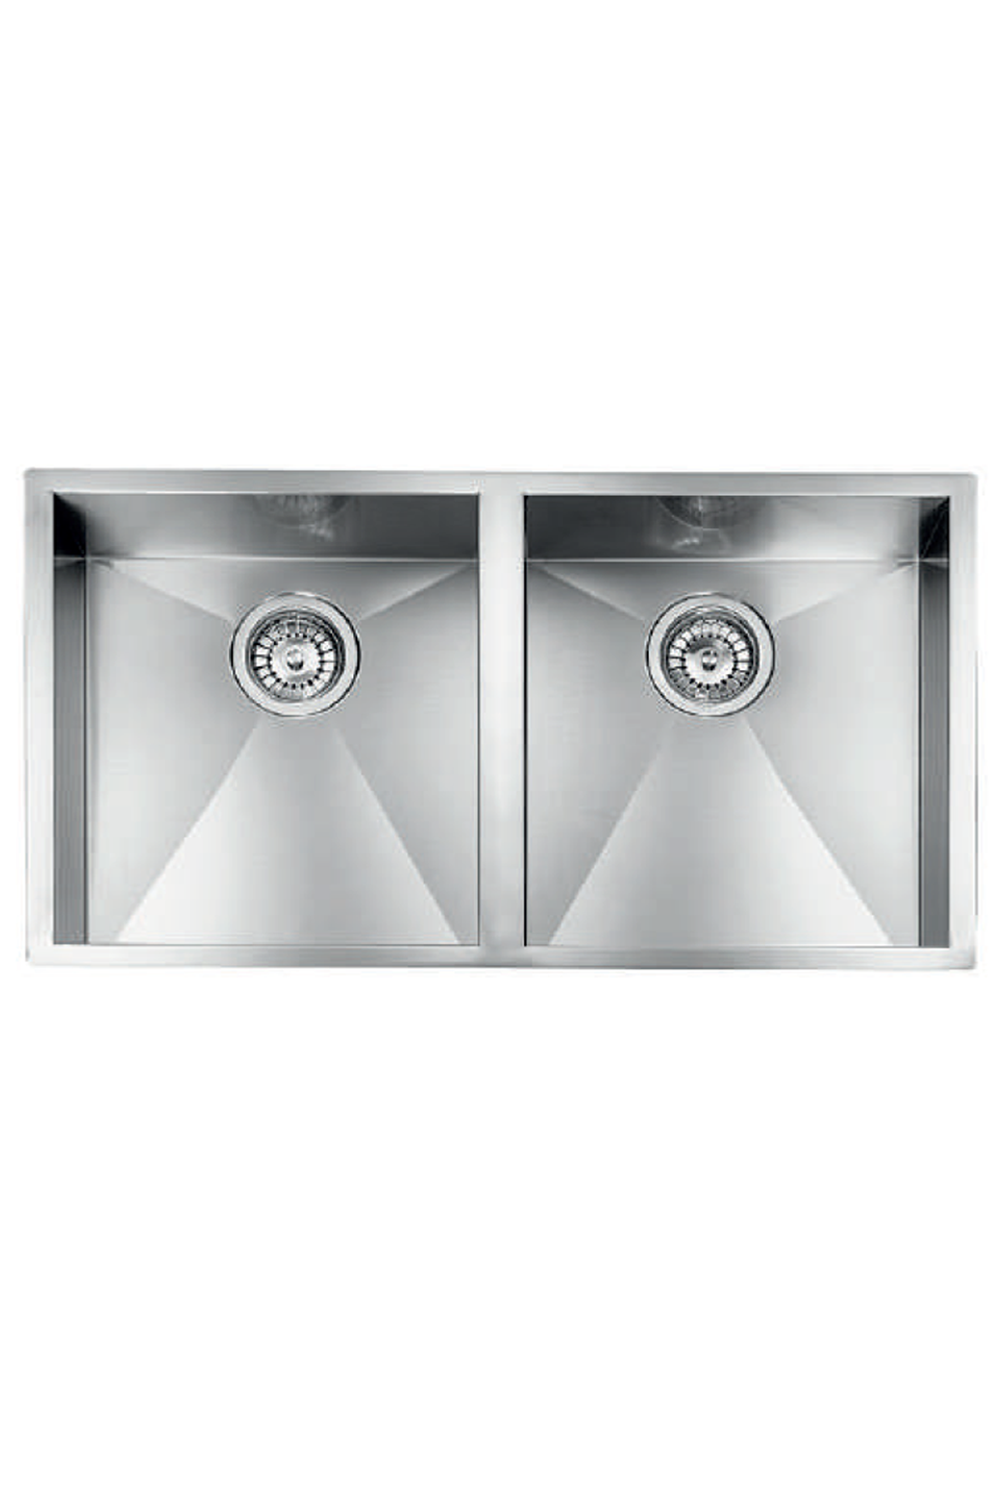 LUISINA 400+400mm R0-Corner Square Stainless Steel Sink 意大利製造直角方形不銹鋼雙星盆 | Made in Italy |